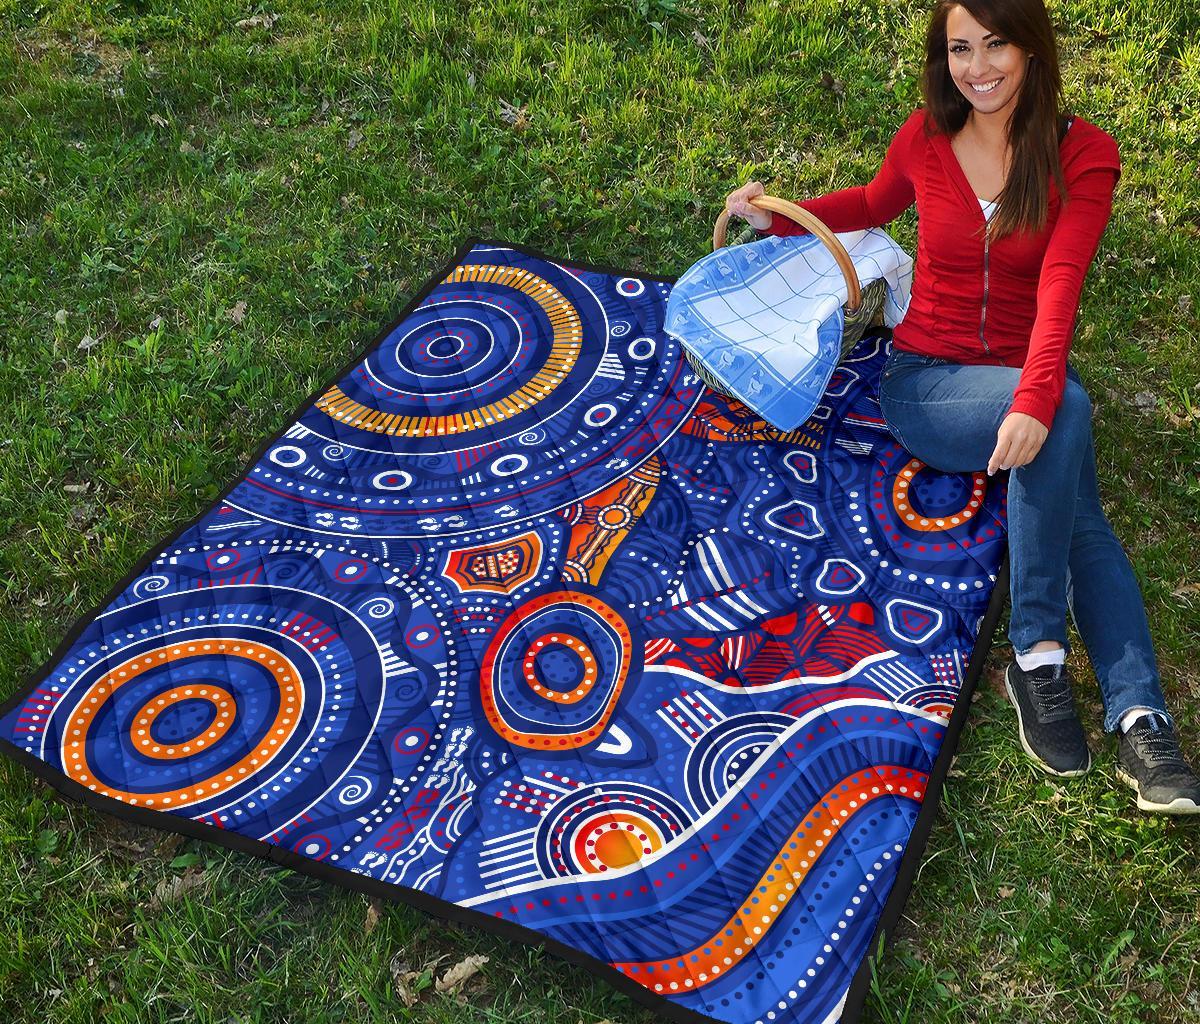 aboriginal-premium-quilt-indigenous-footprint-patterns-blue-color